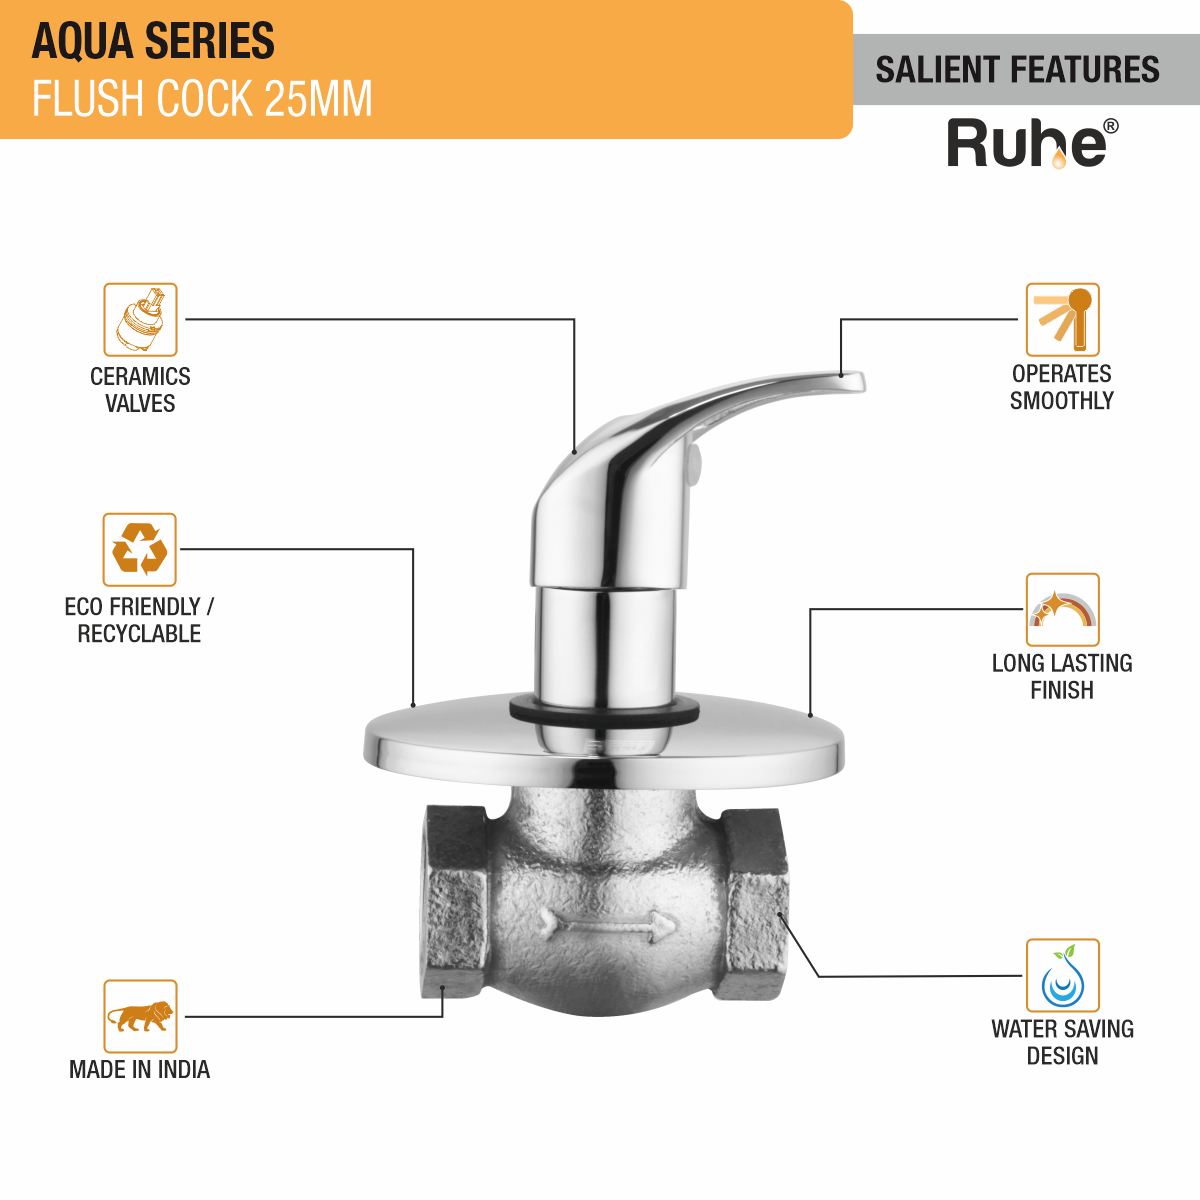 Aqua Flush Valve Brass Faucet (25mm) features